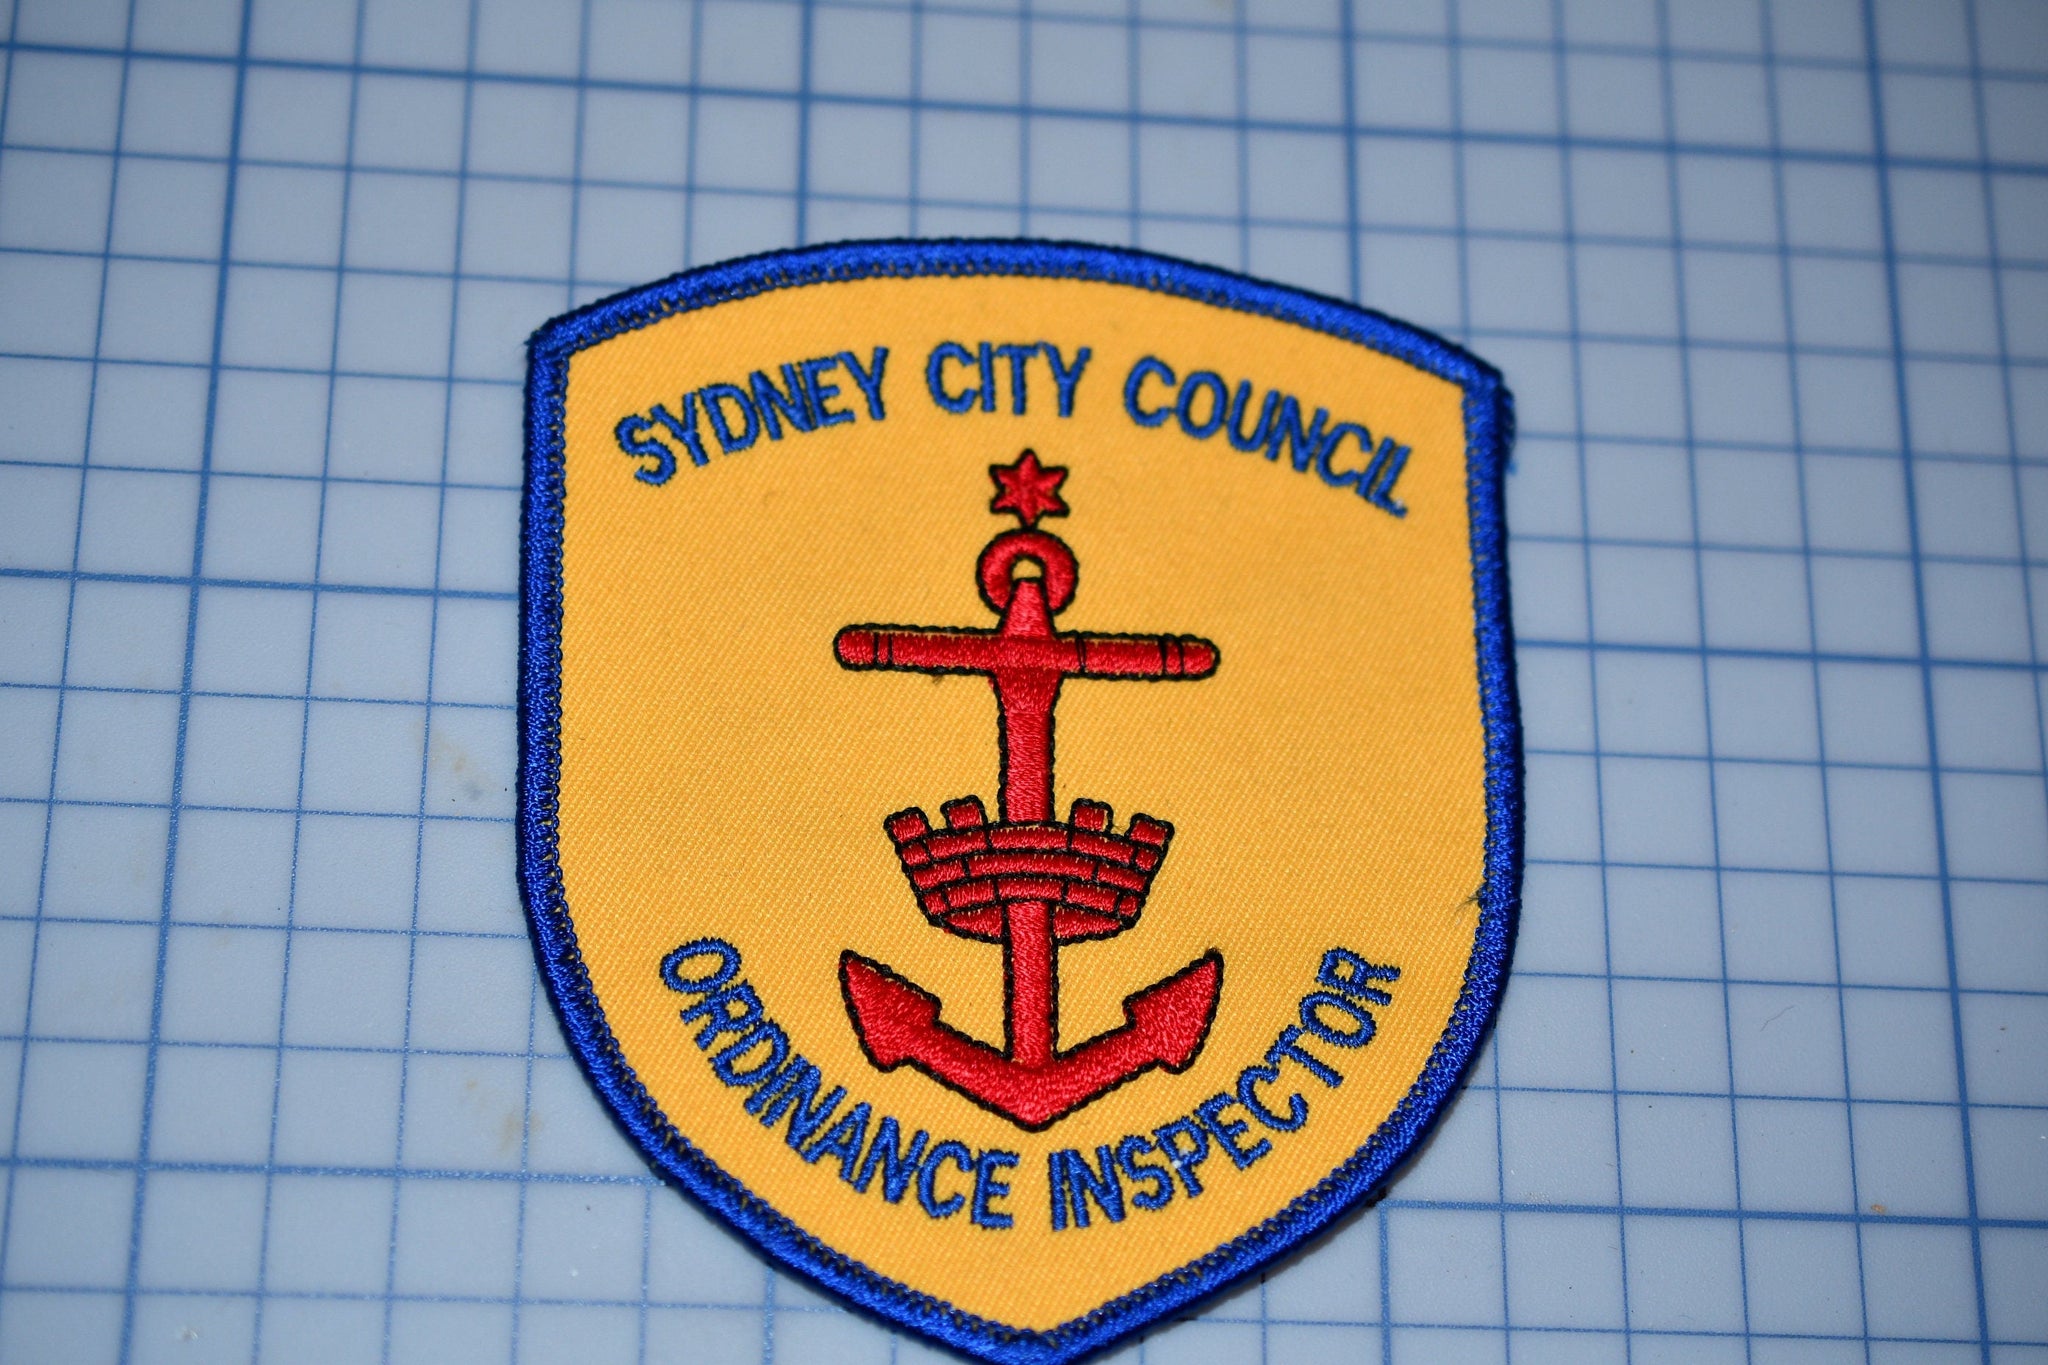 Sydney City Council Ordinance Inspector Patch (B26-303)